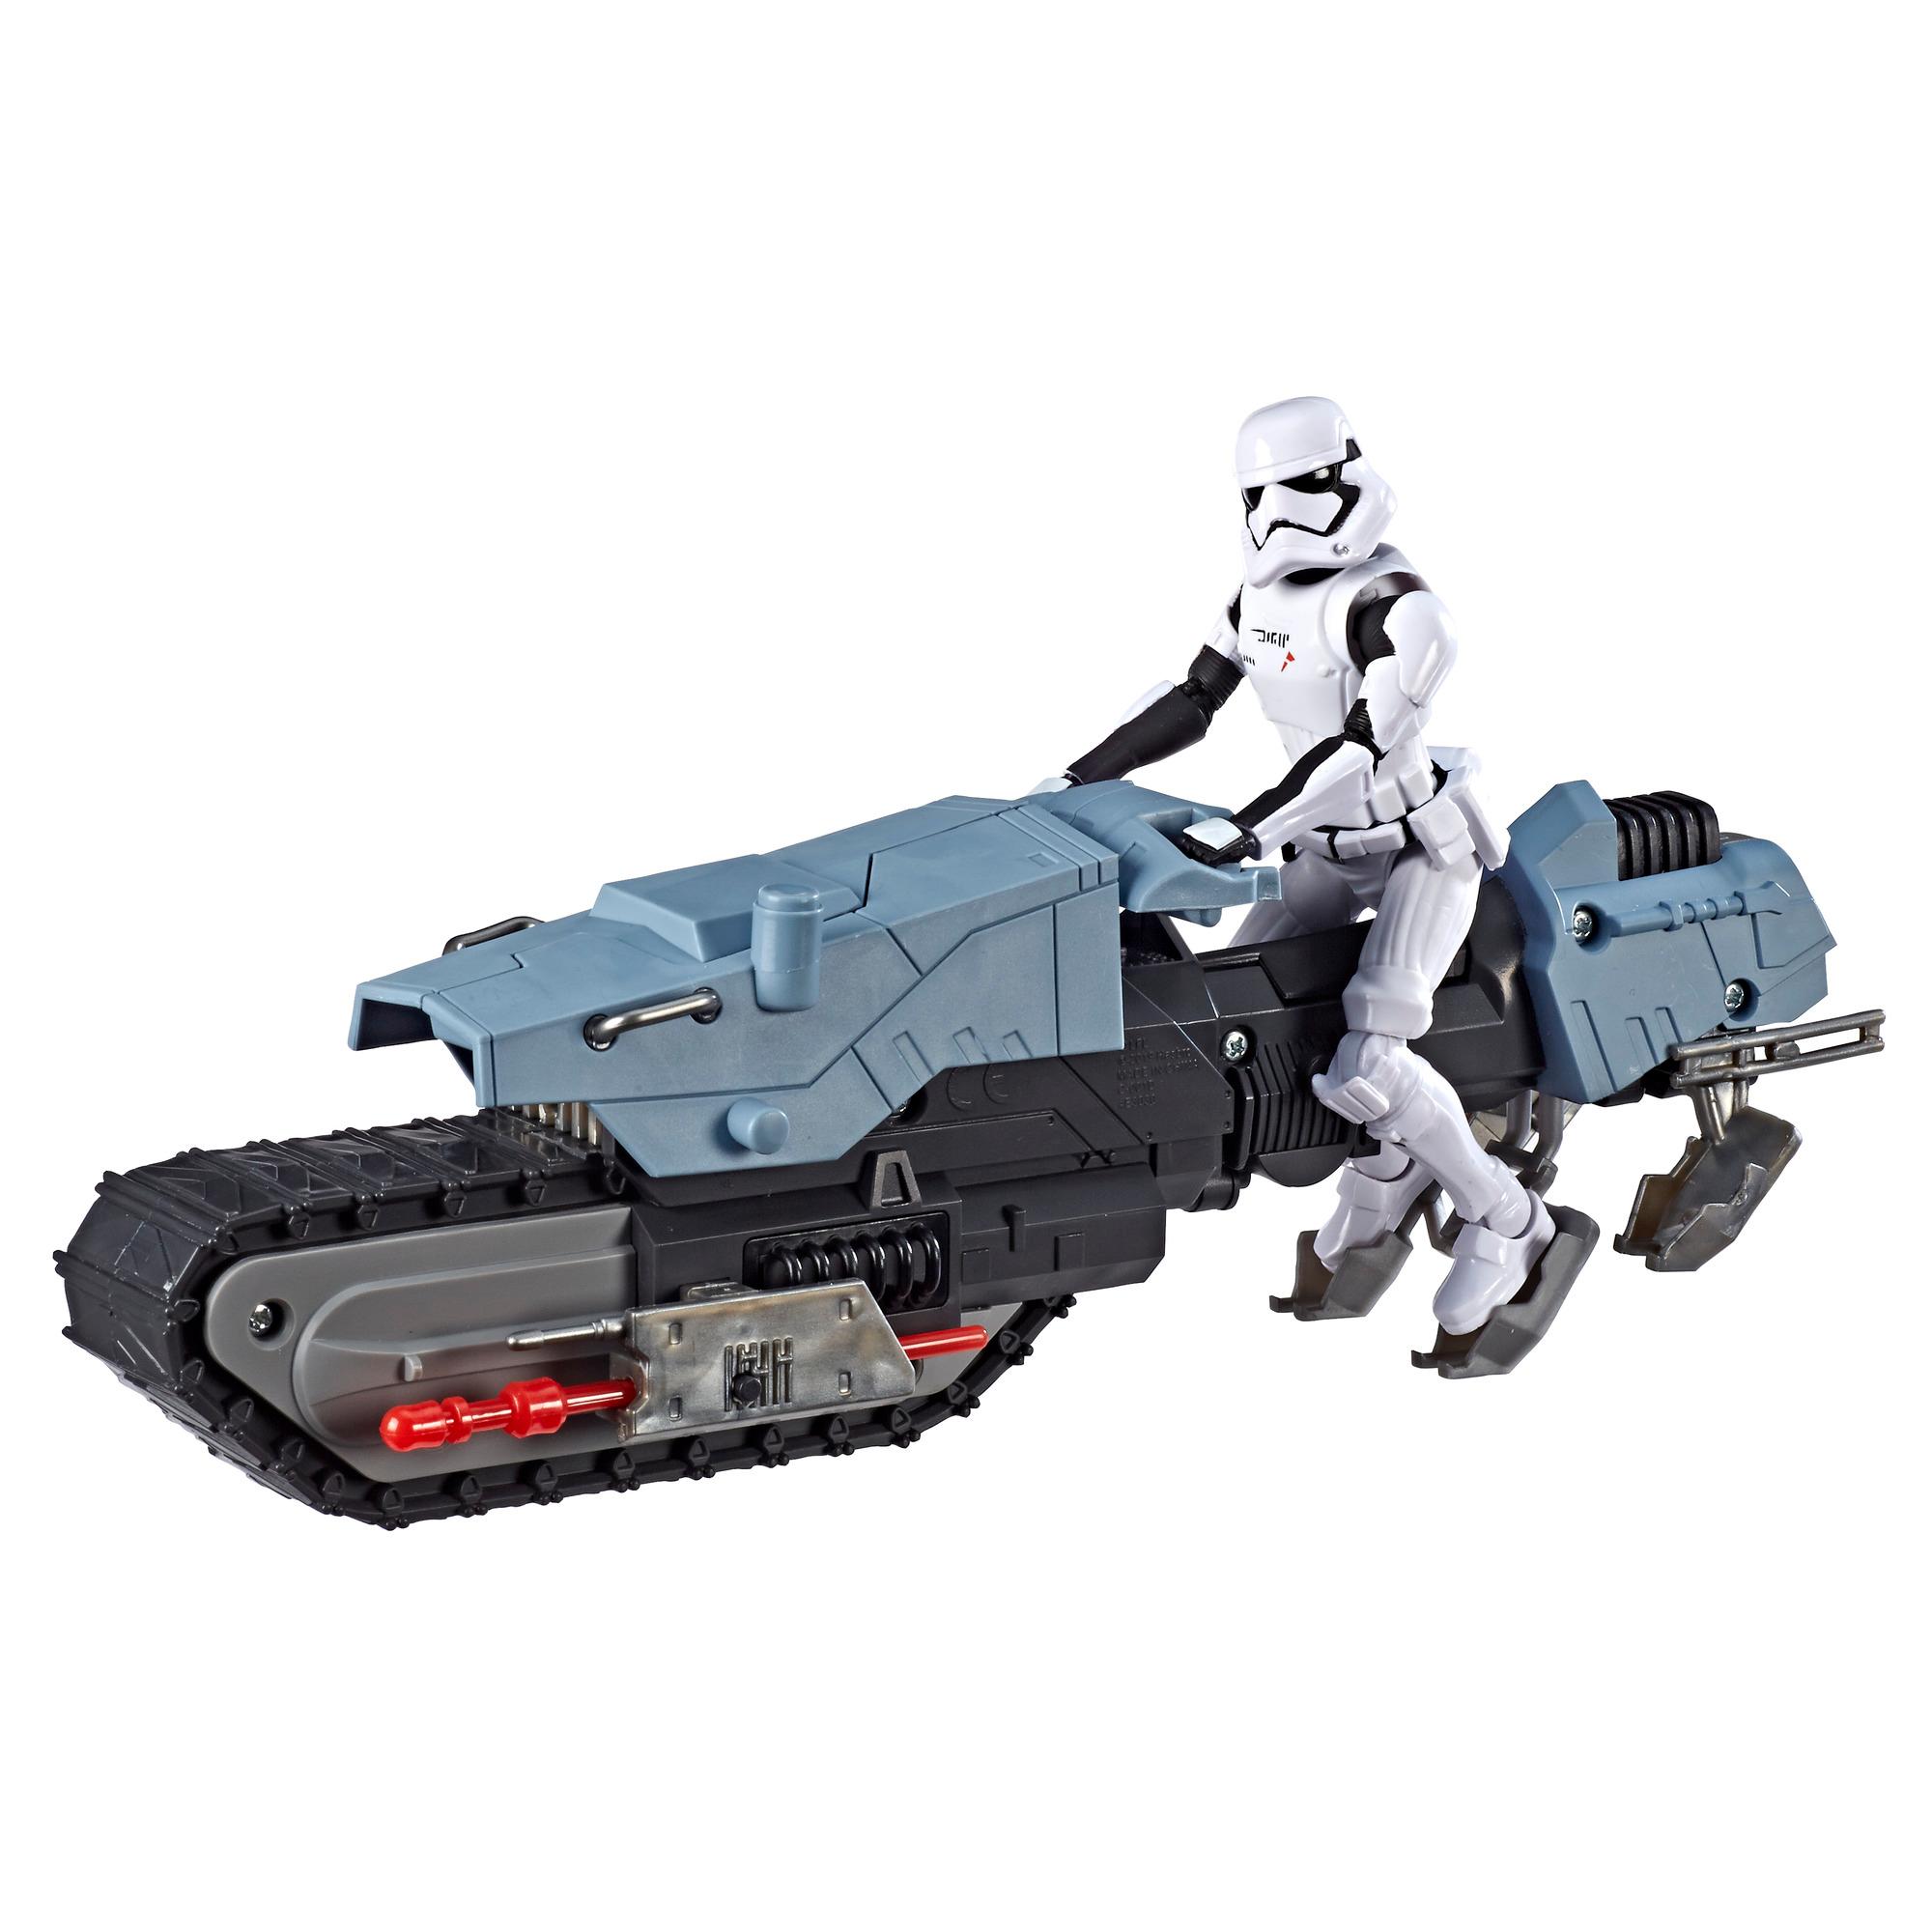 Star Wars Galaxy of Adventures First Order Driver and Treadspeeder Toy